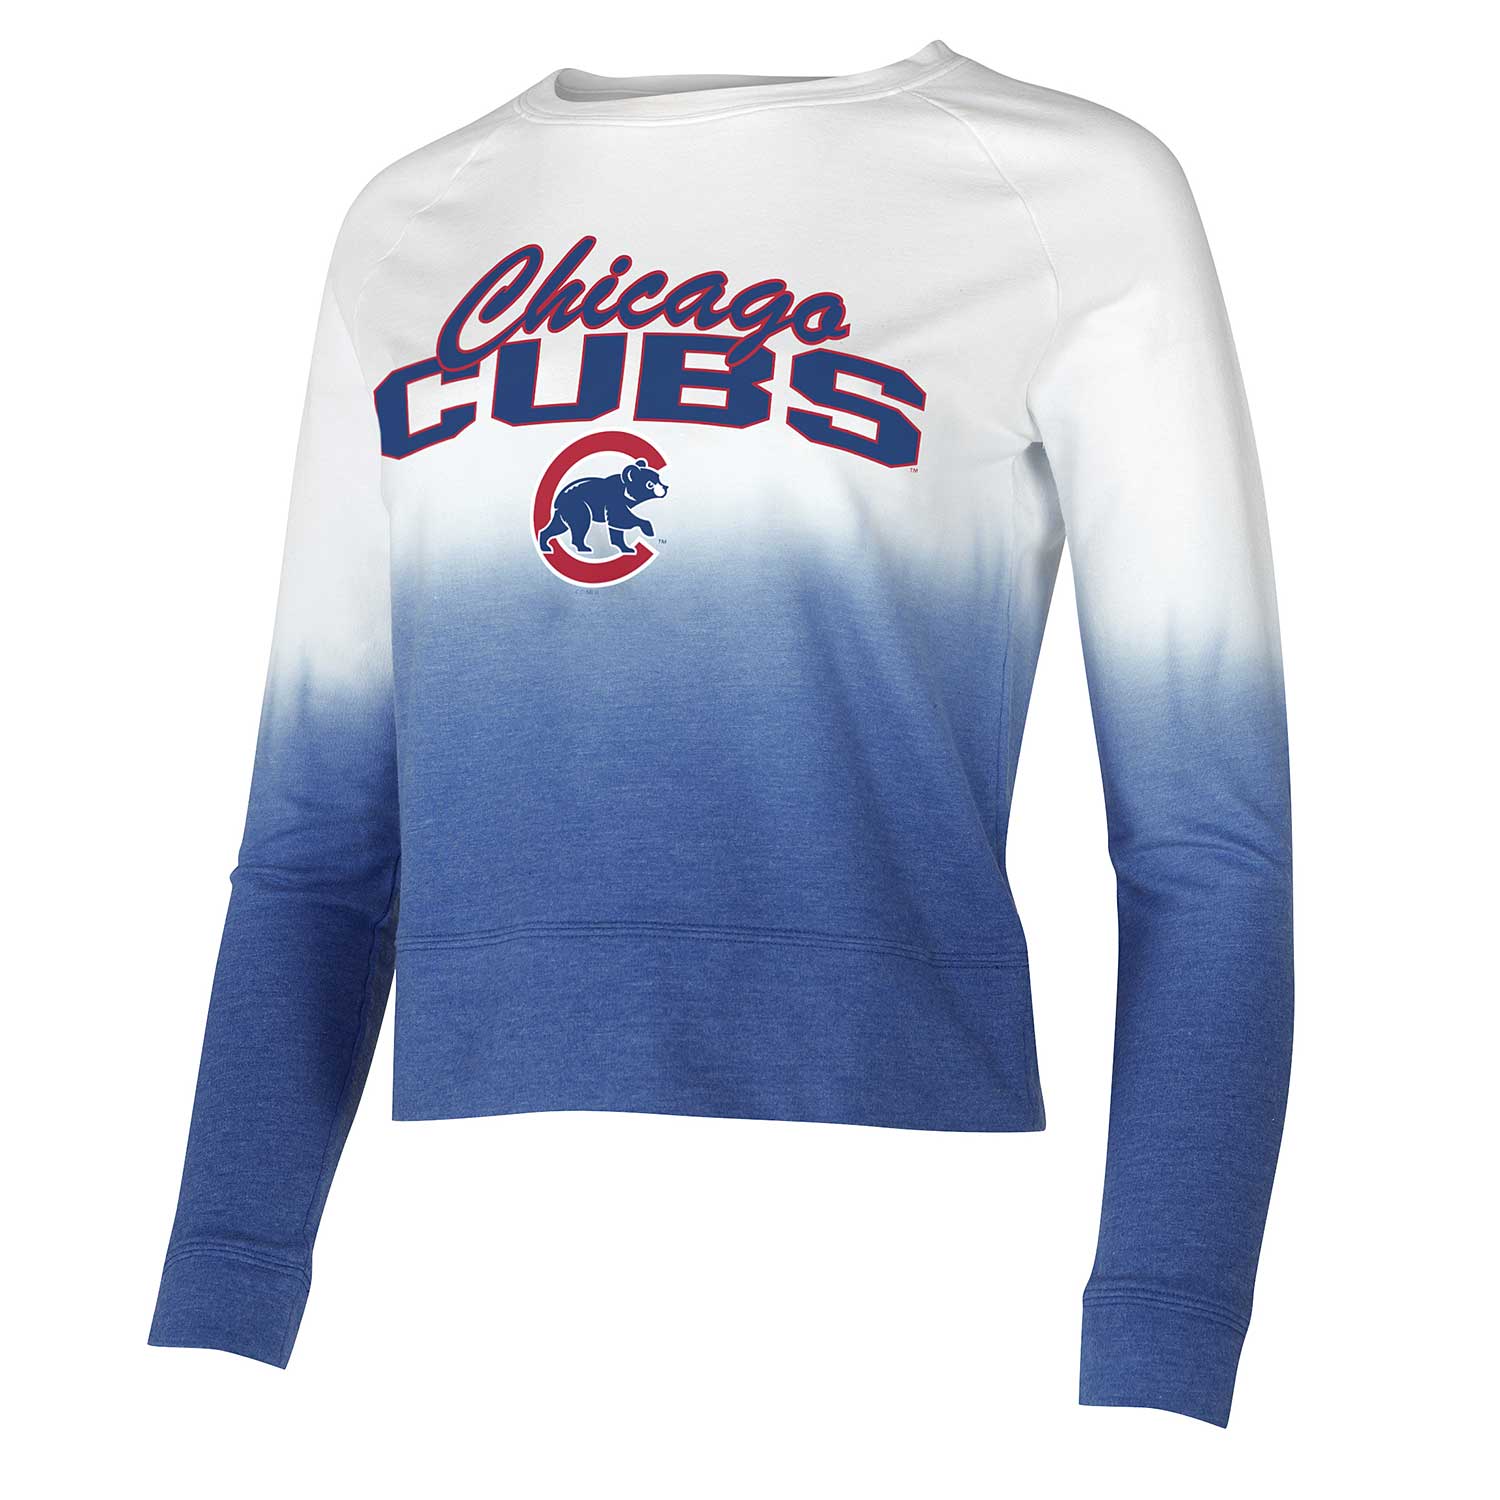 Chicago Cubs Ladies Apparel, Ladies Cubs Clothing, Merchandise